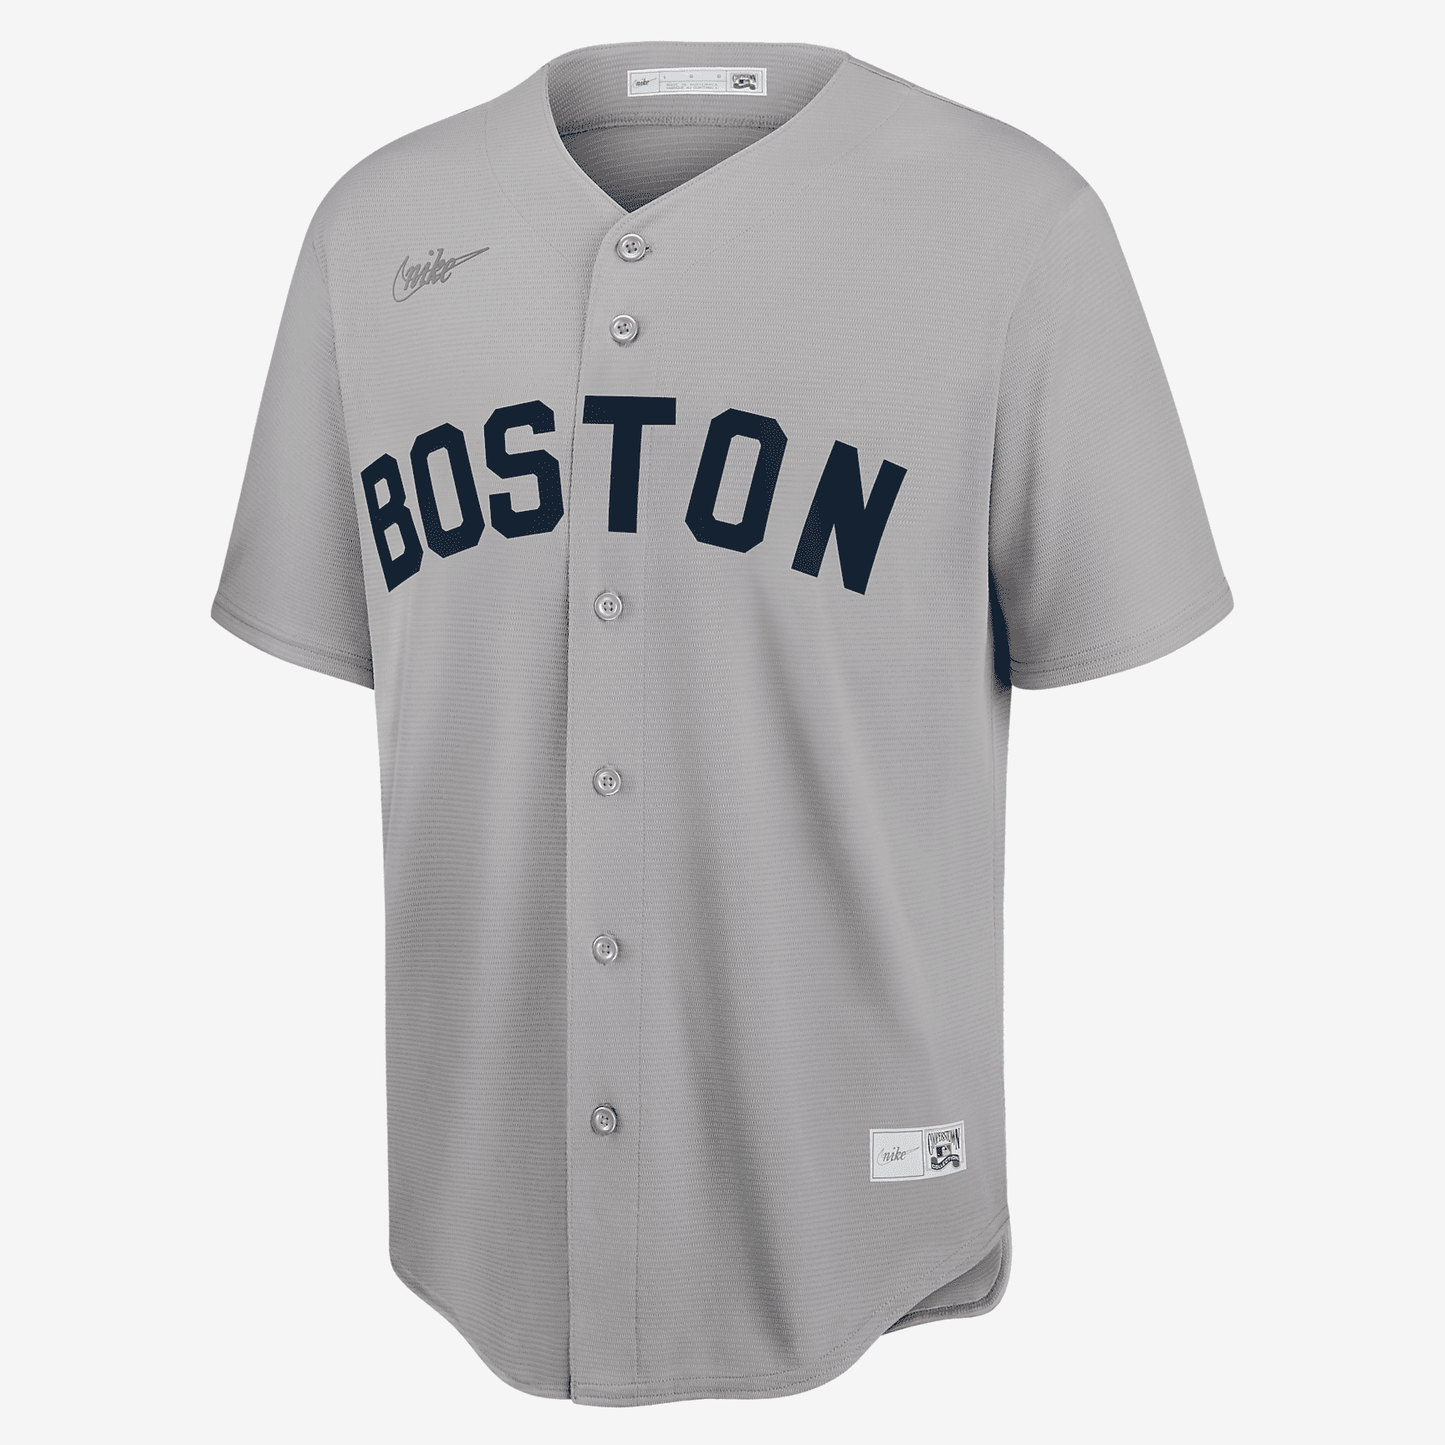 MLB Boston Red Sox (Carl Yastrzemski) Men's Cooperstown Baseball Jersey - Atmosphere Grey